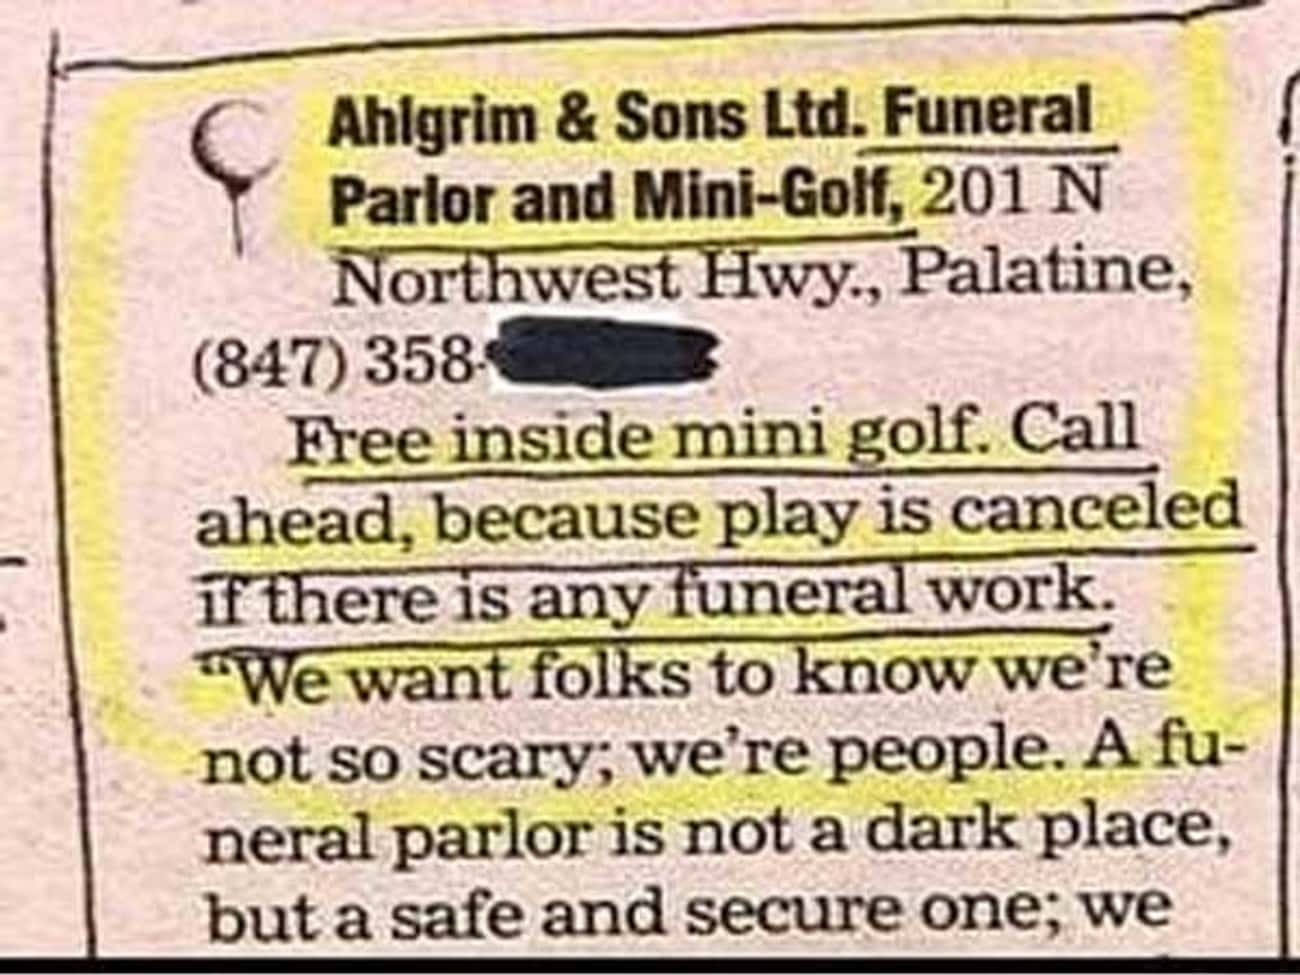 Keeping the Fun in Funerals